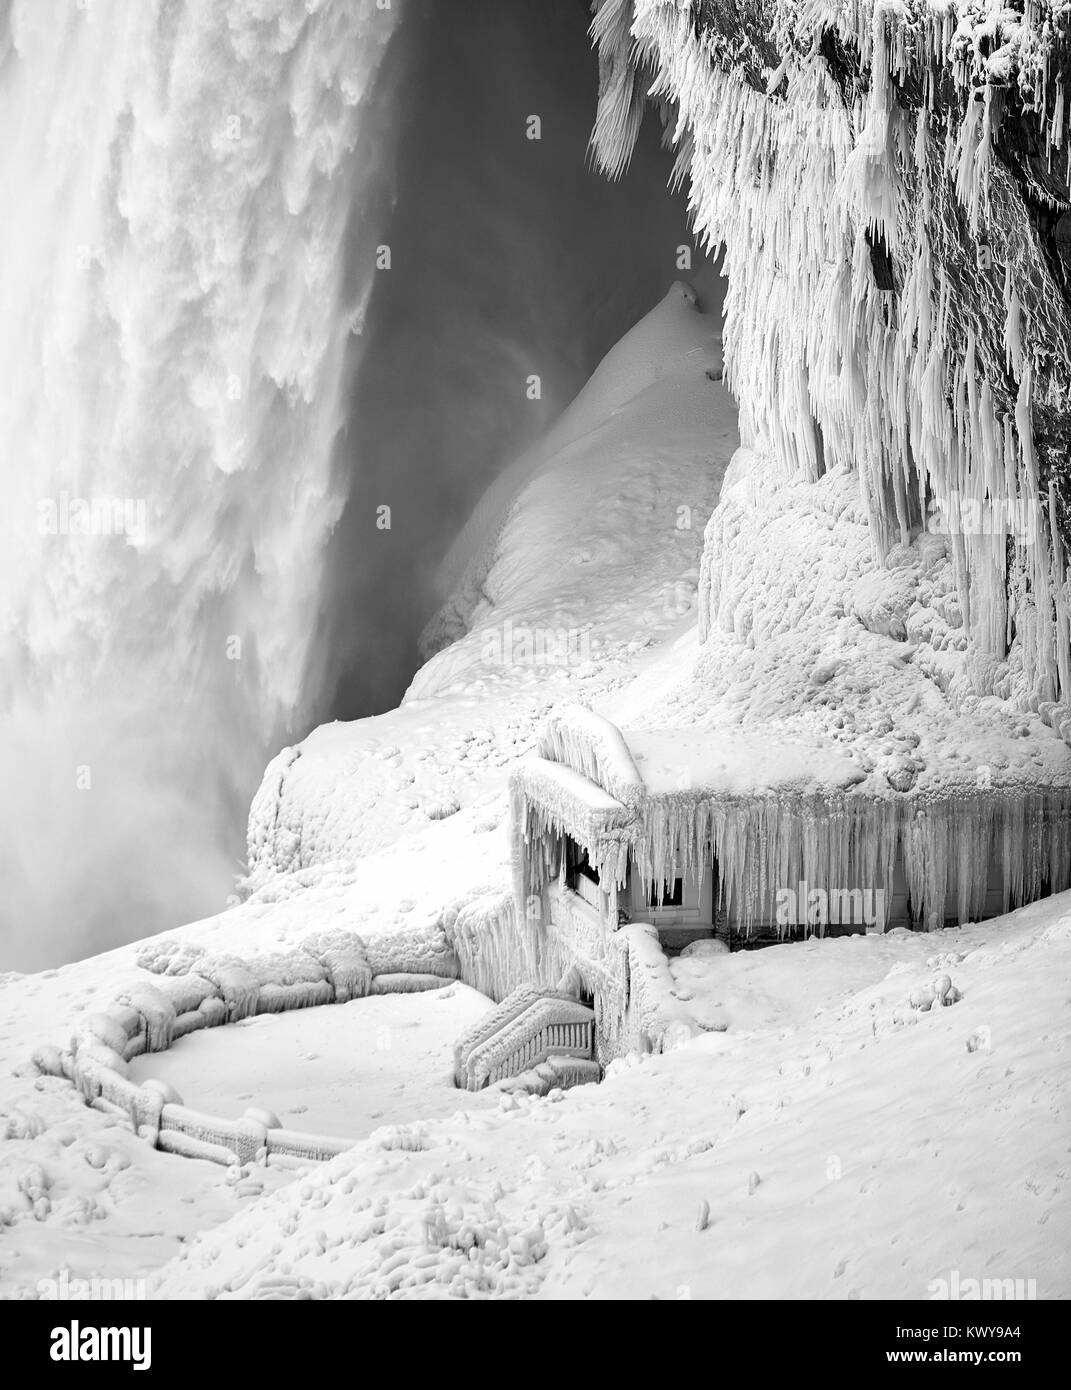 Niagara Falls - Ice Studies Jan 2018 Stock Photo